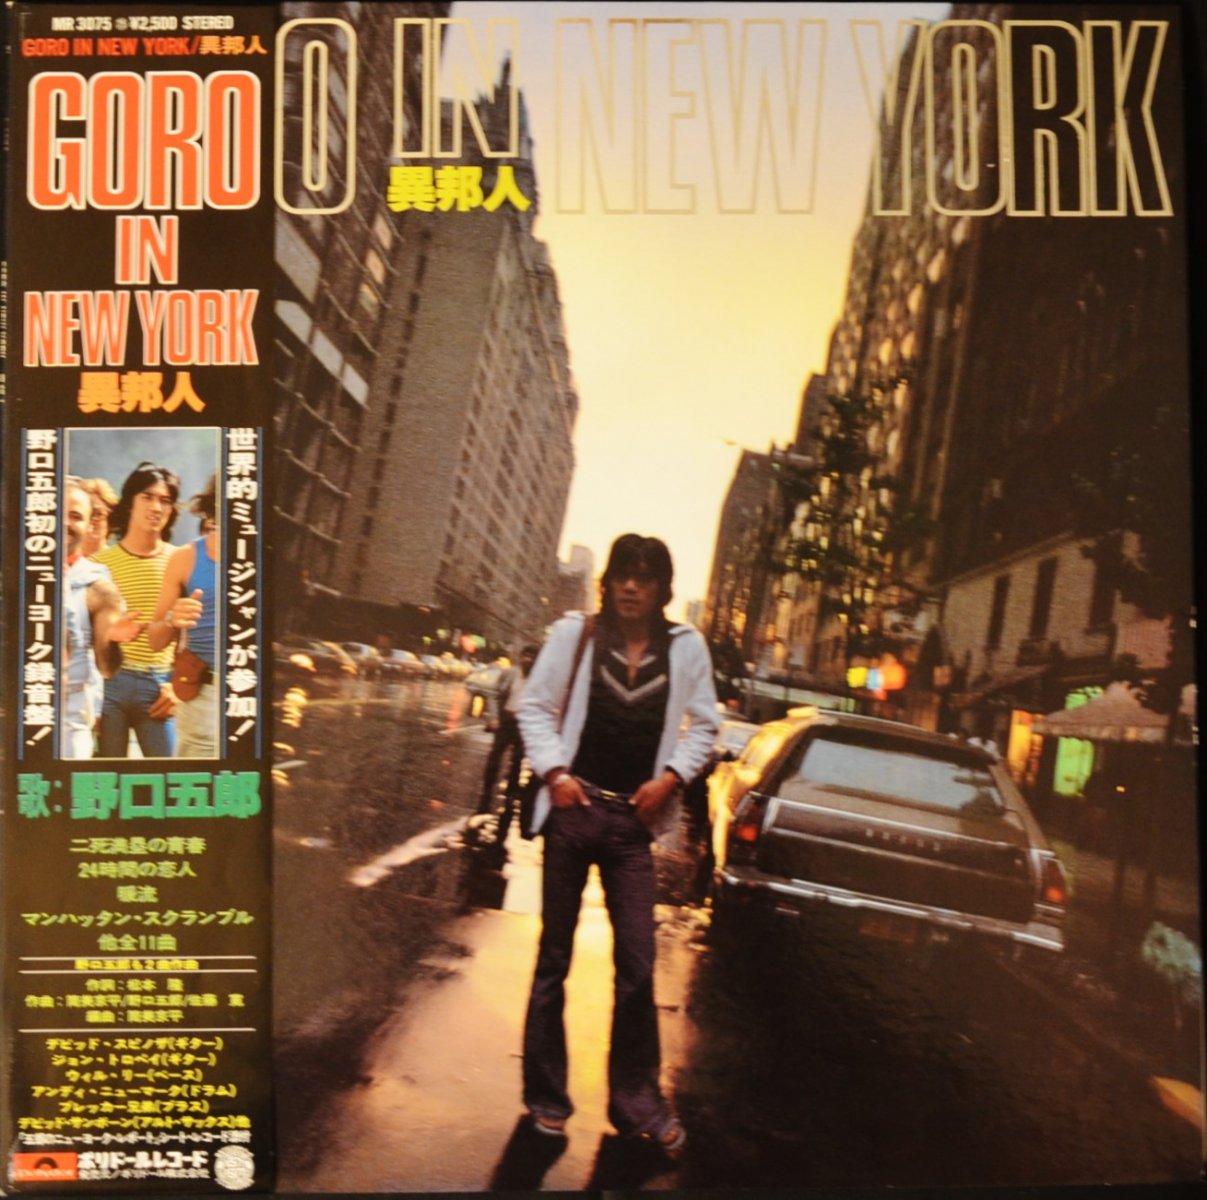 野口五郎 GORO NOGUCHI / 異邦人 GORO IN NEW YORK (LP)